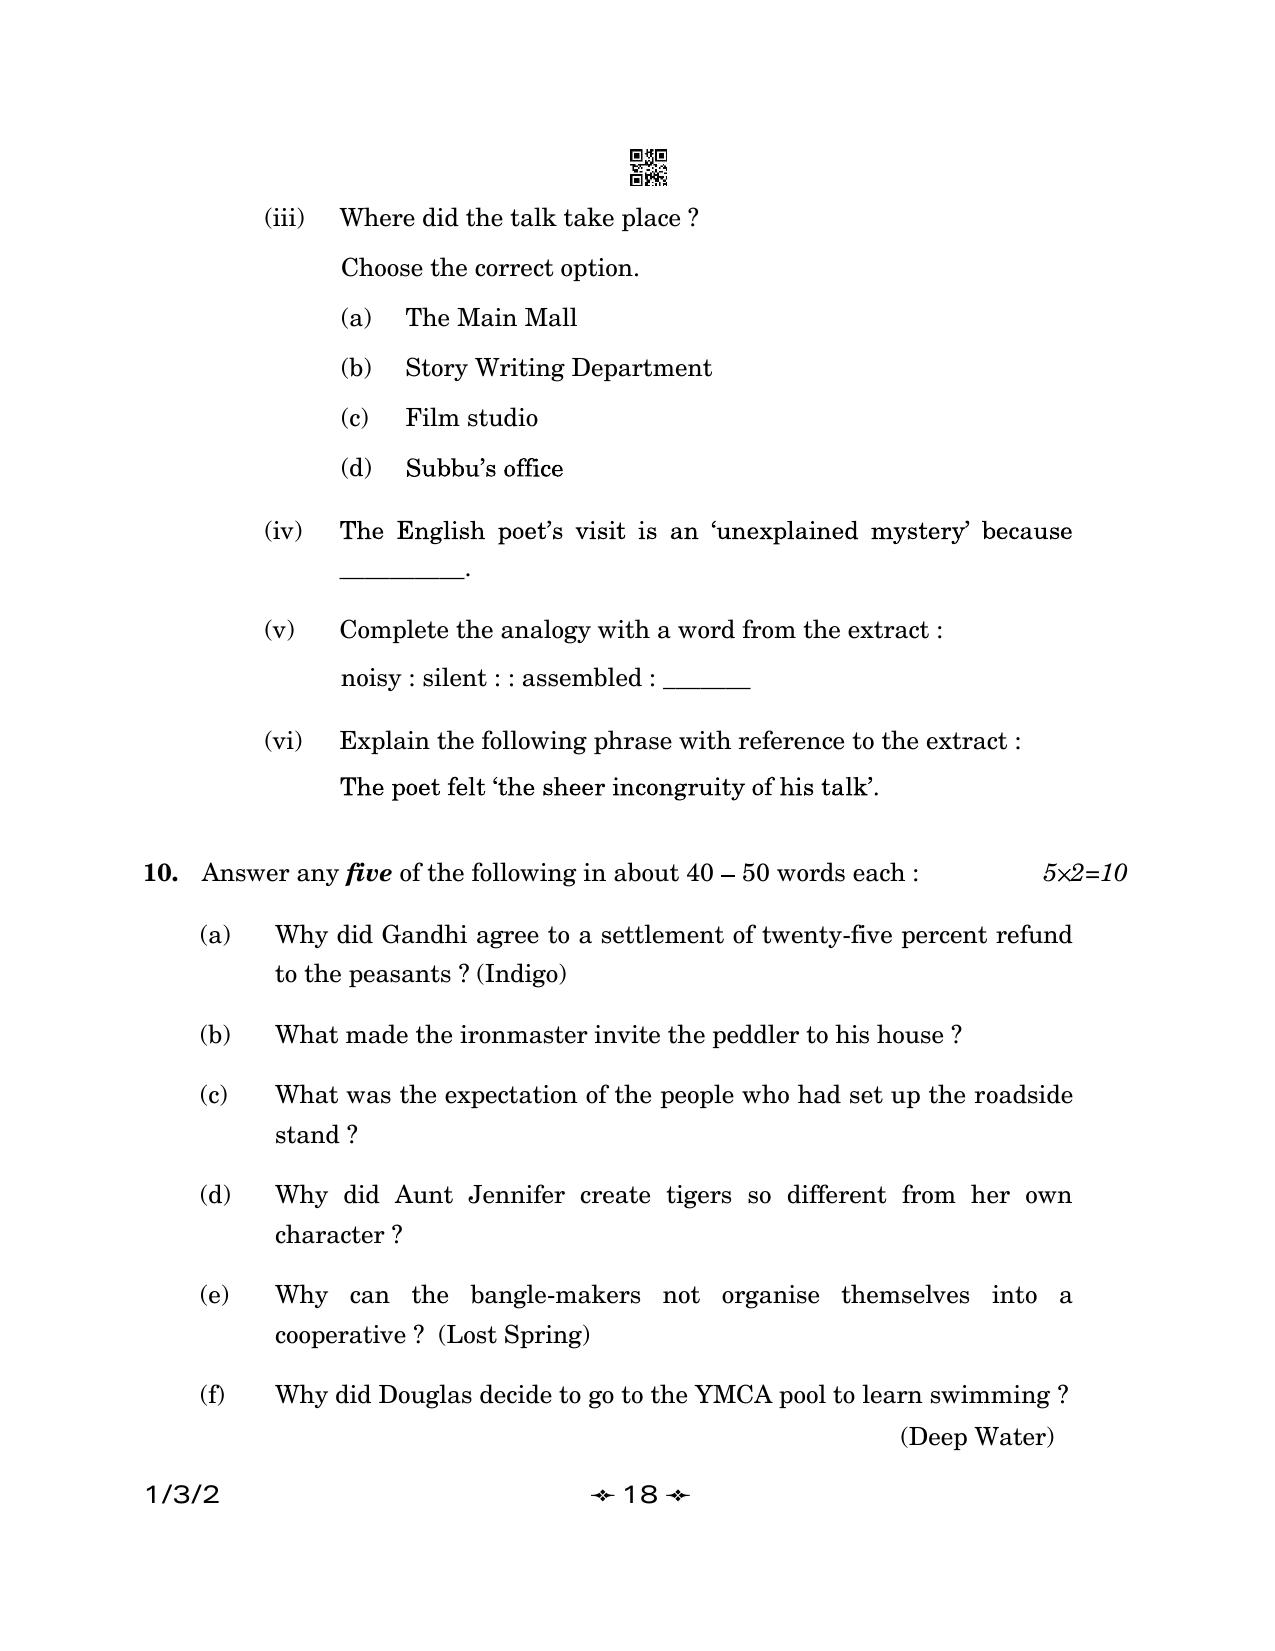 CBSE Class 12 1-3-2 English Core 2023 Question Paper - Page 18